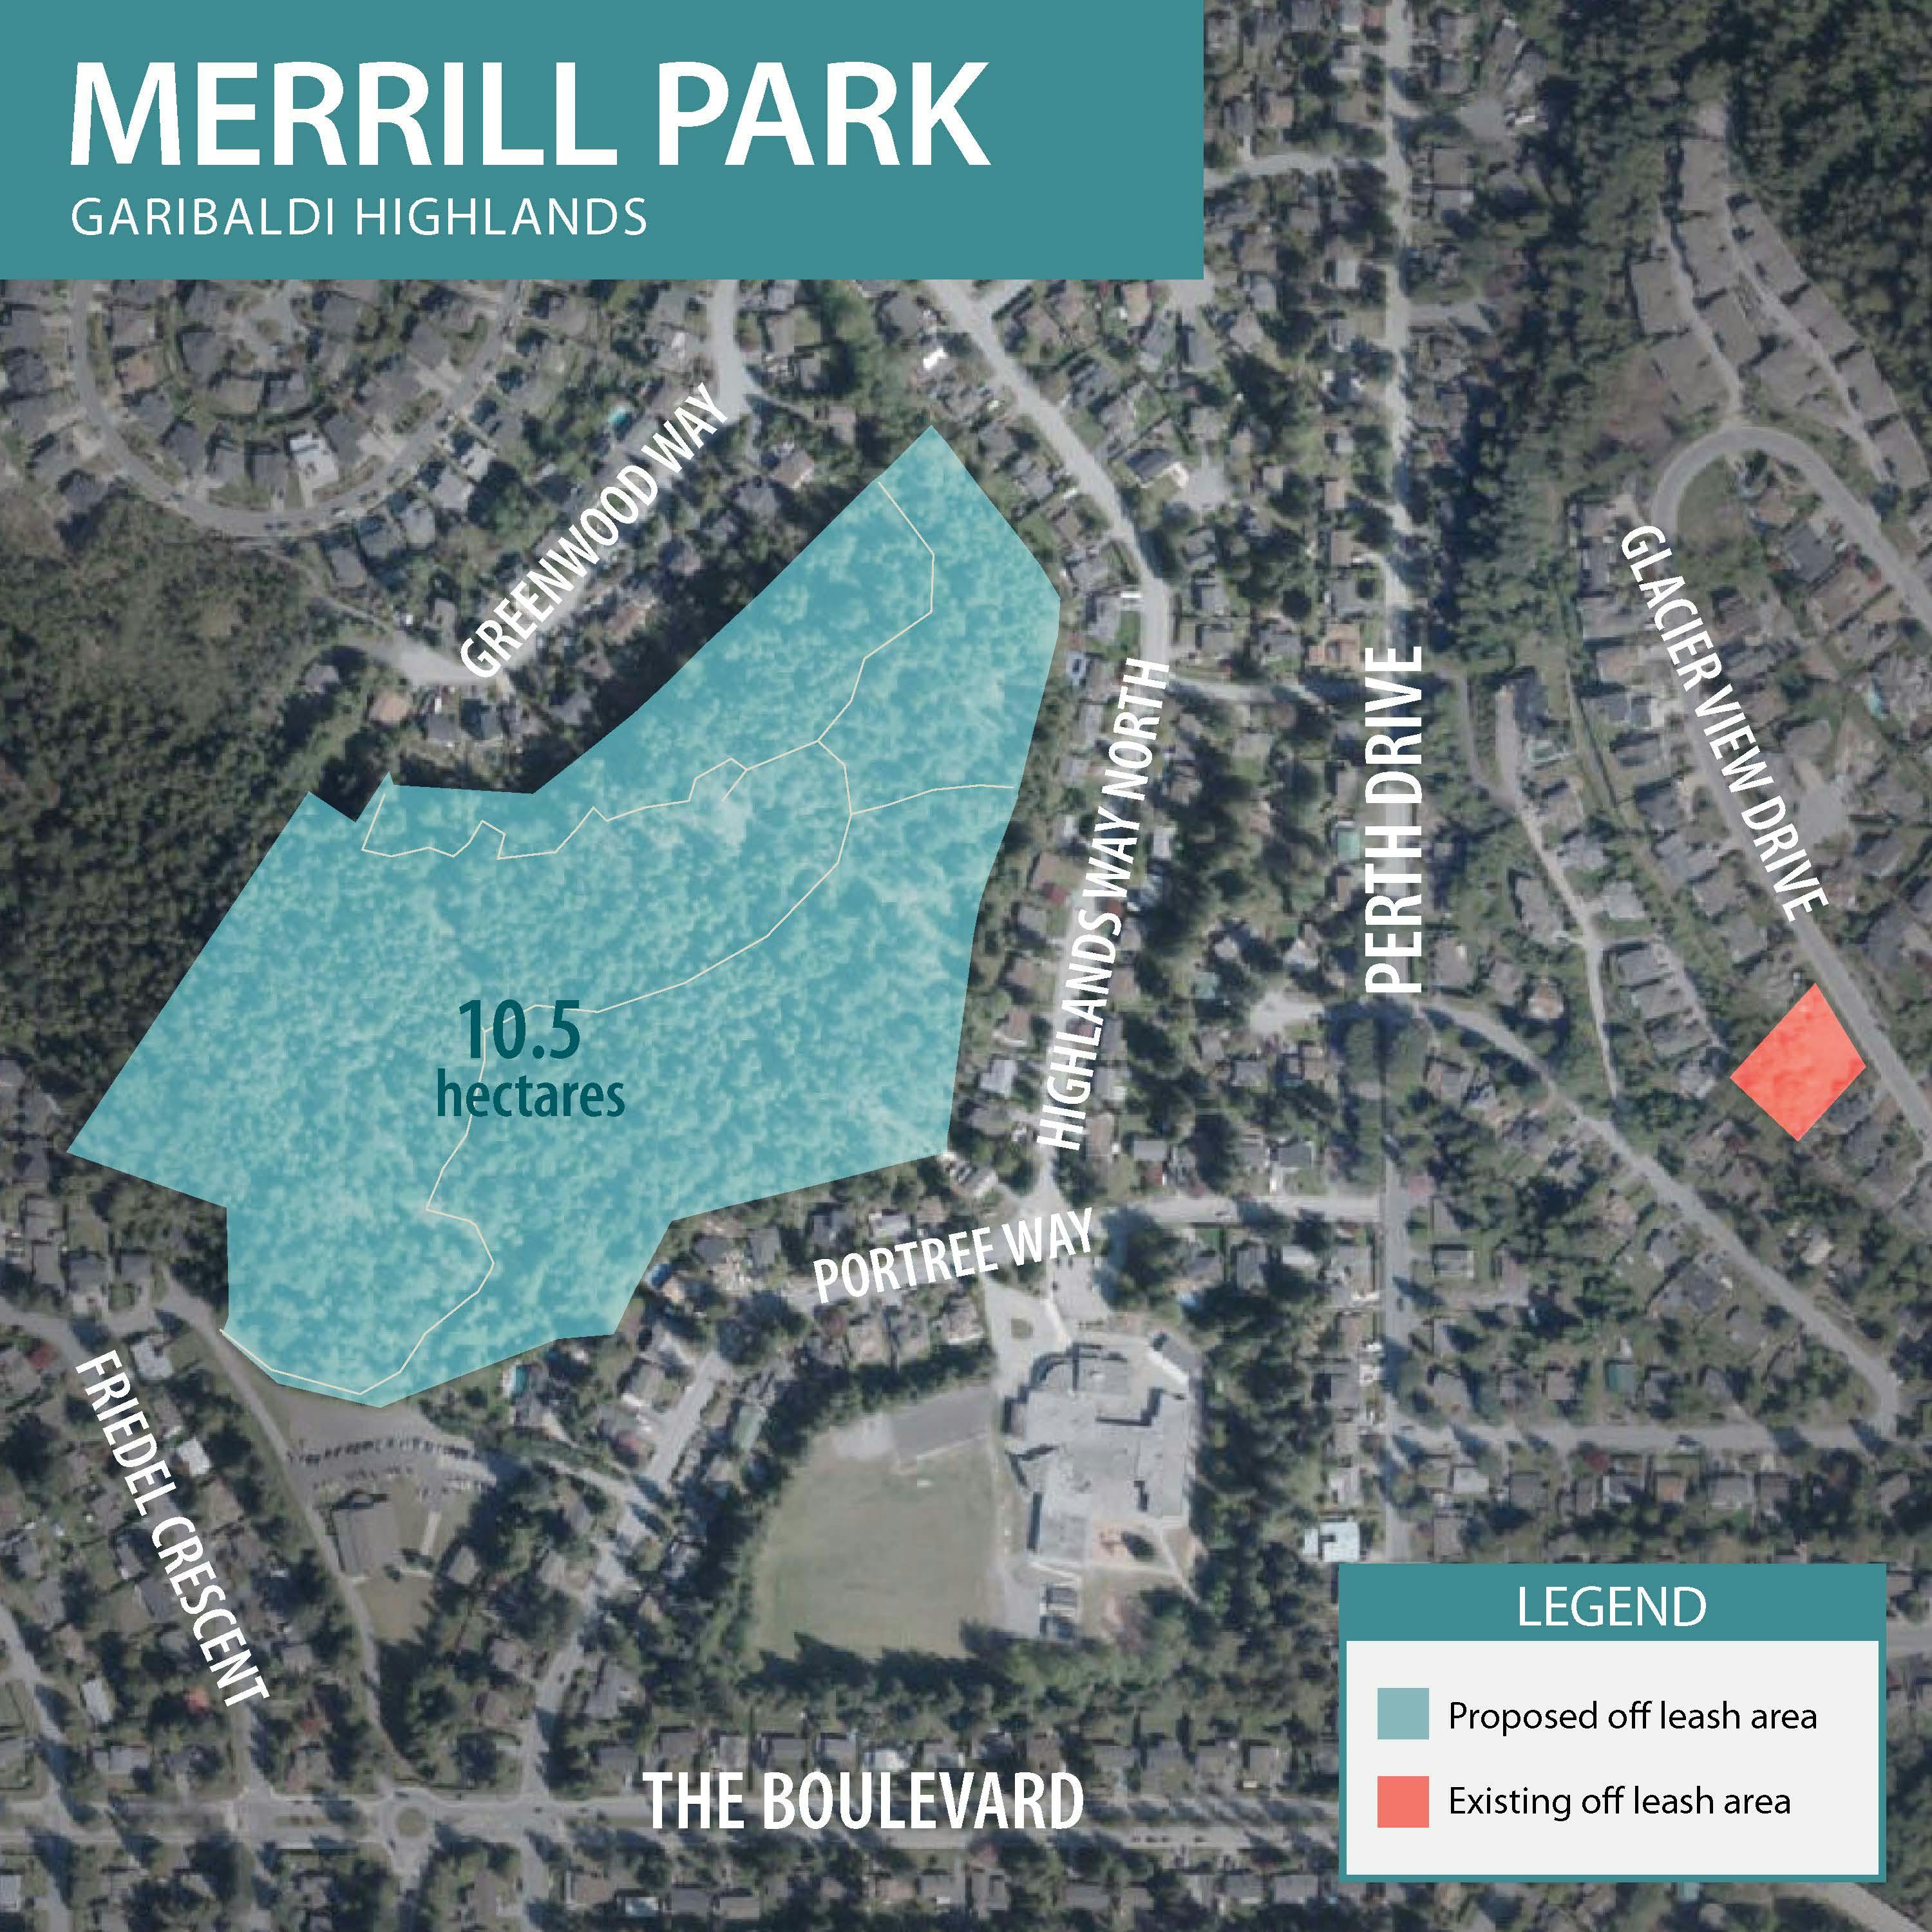 Map of Merrill Park